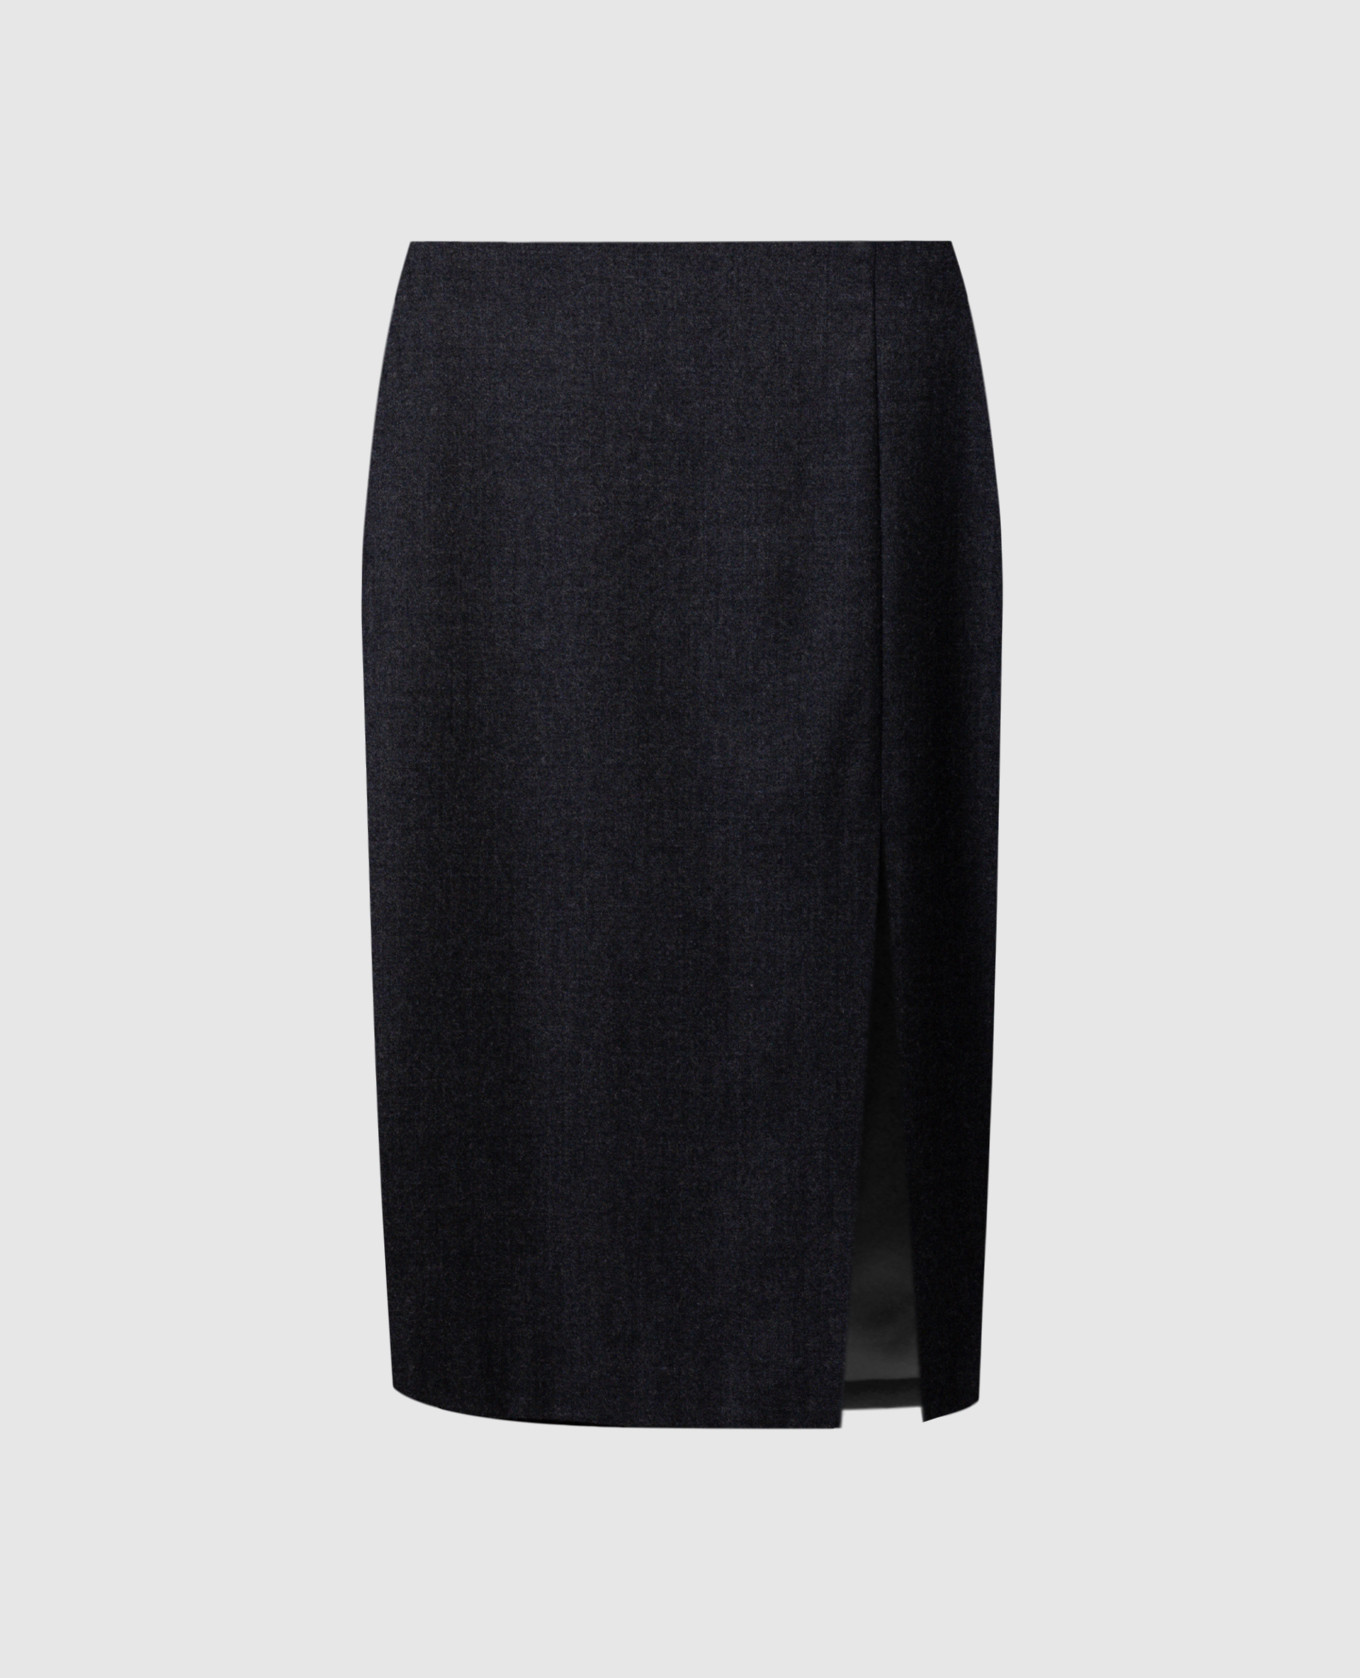 Gray skirt made of wool